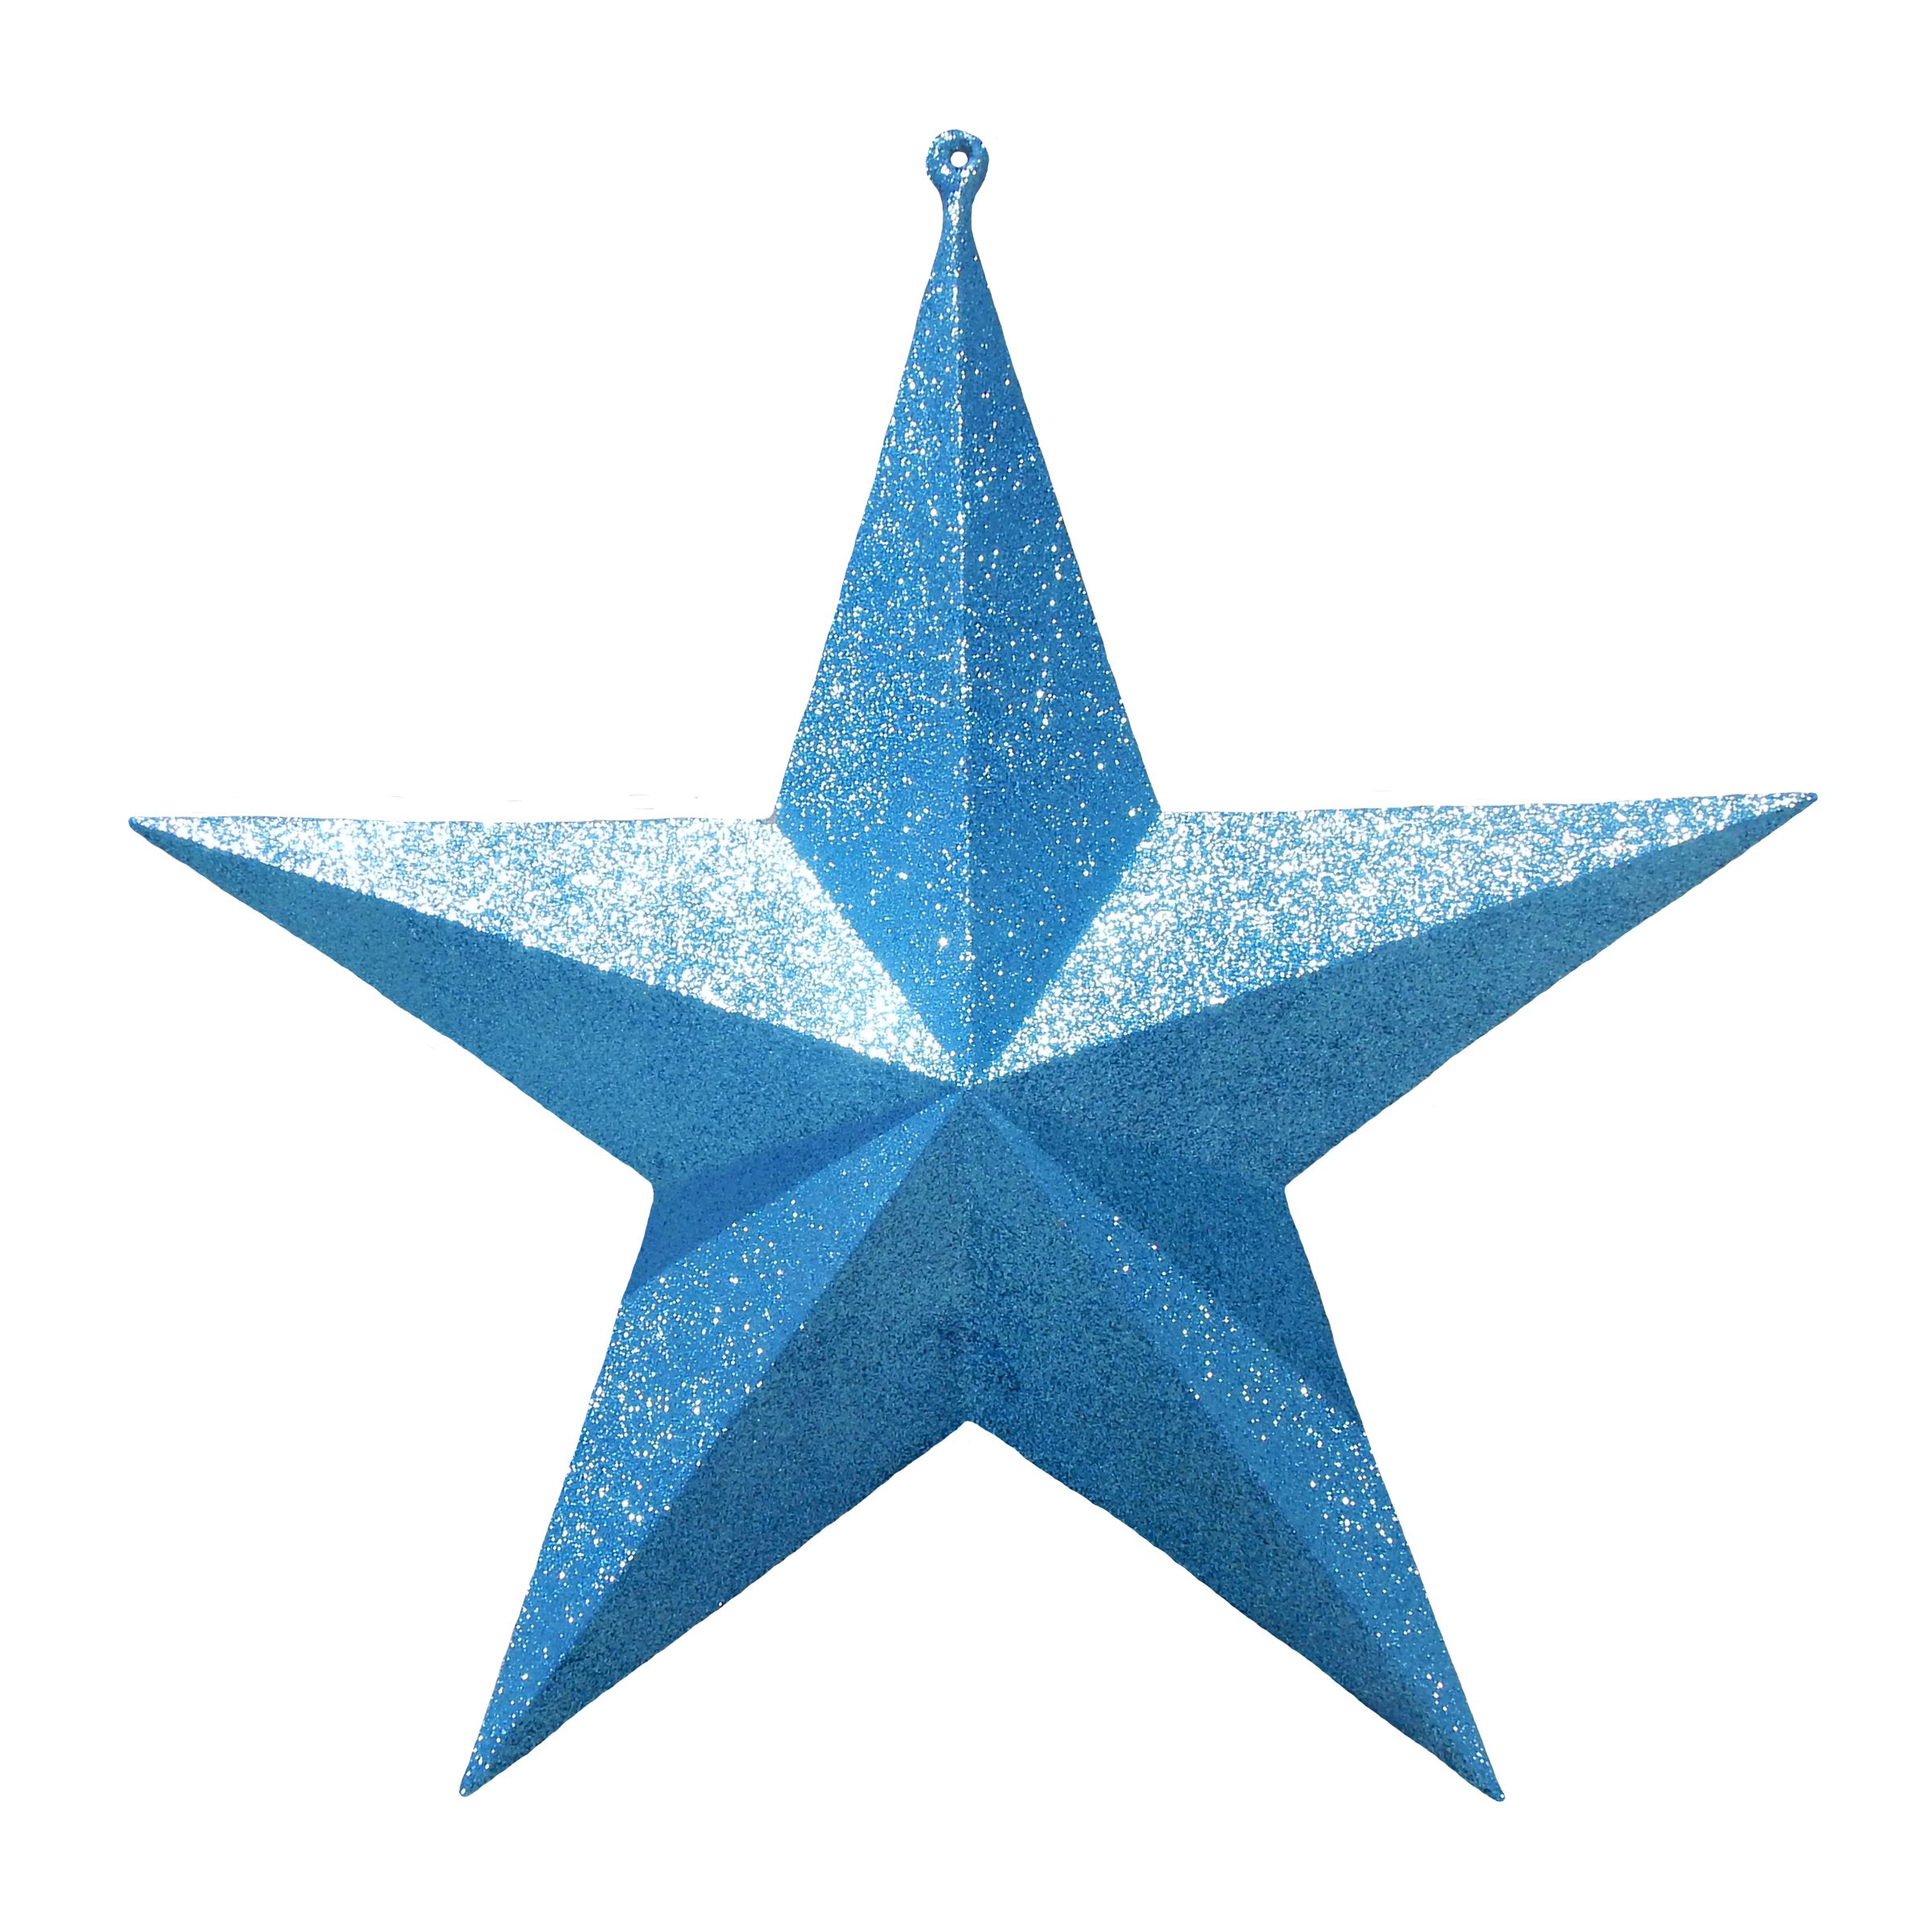 Oversized fiberglass star ornament